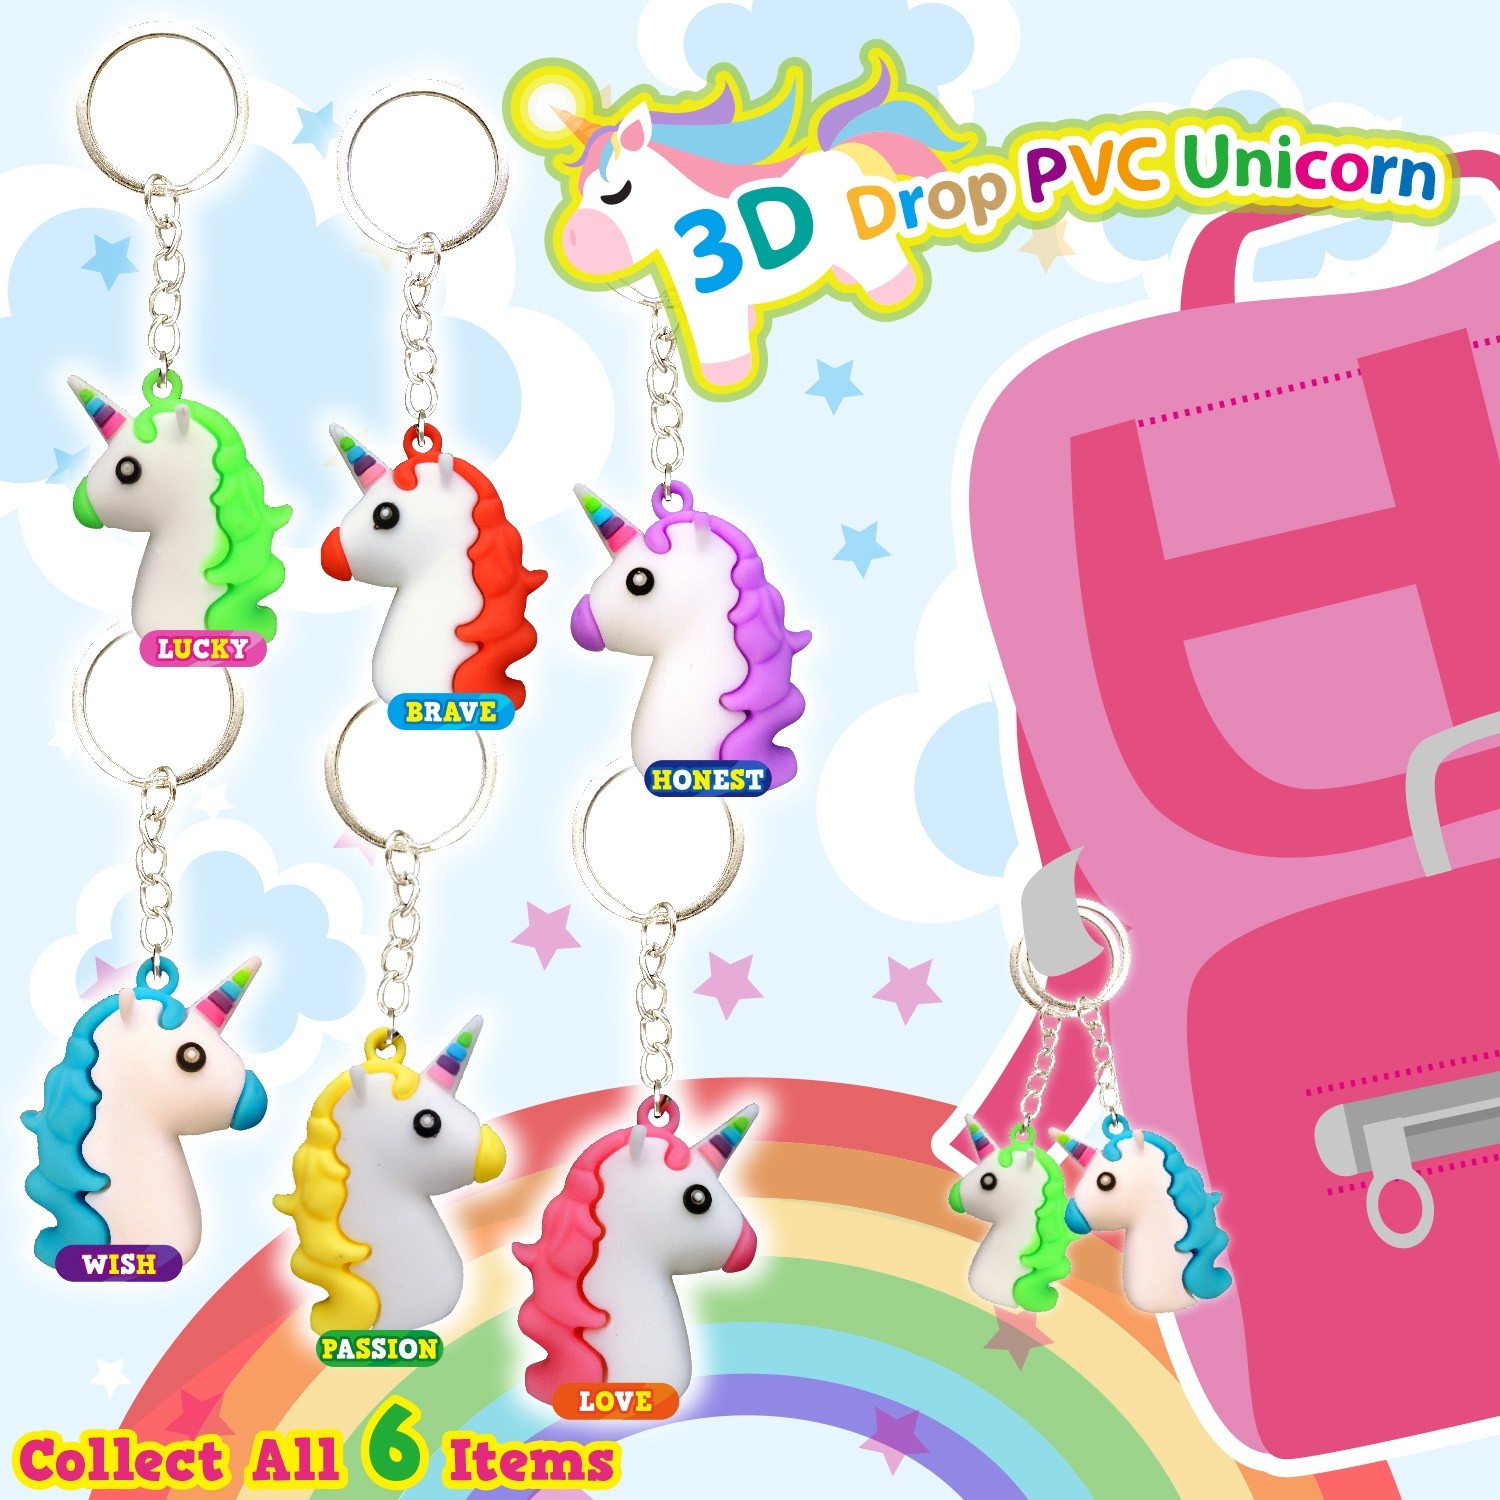 3D Drop PVC Unicorn